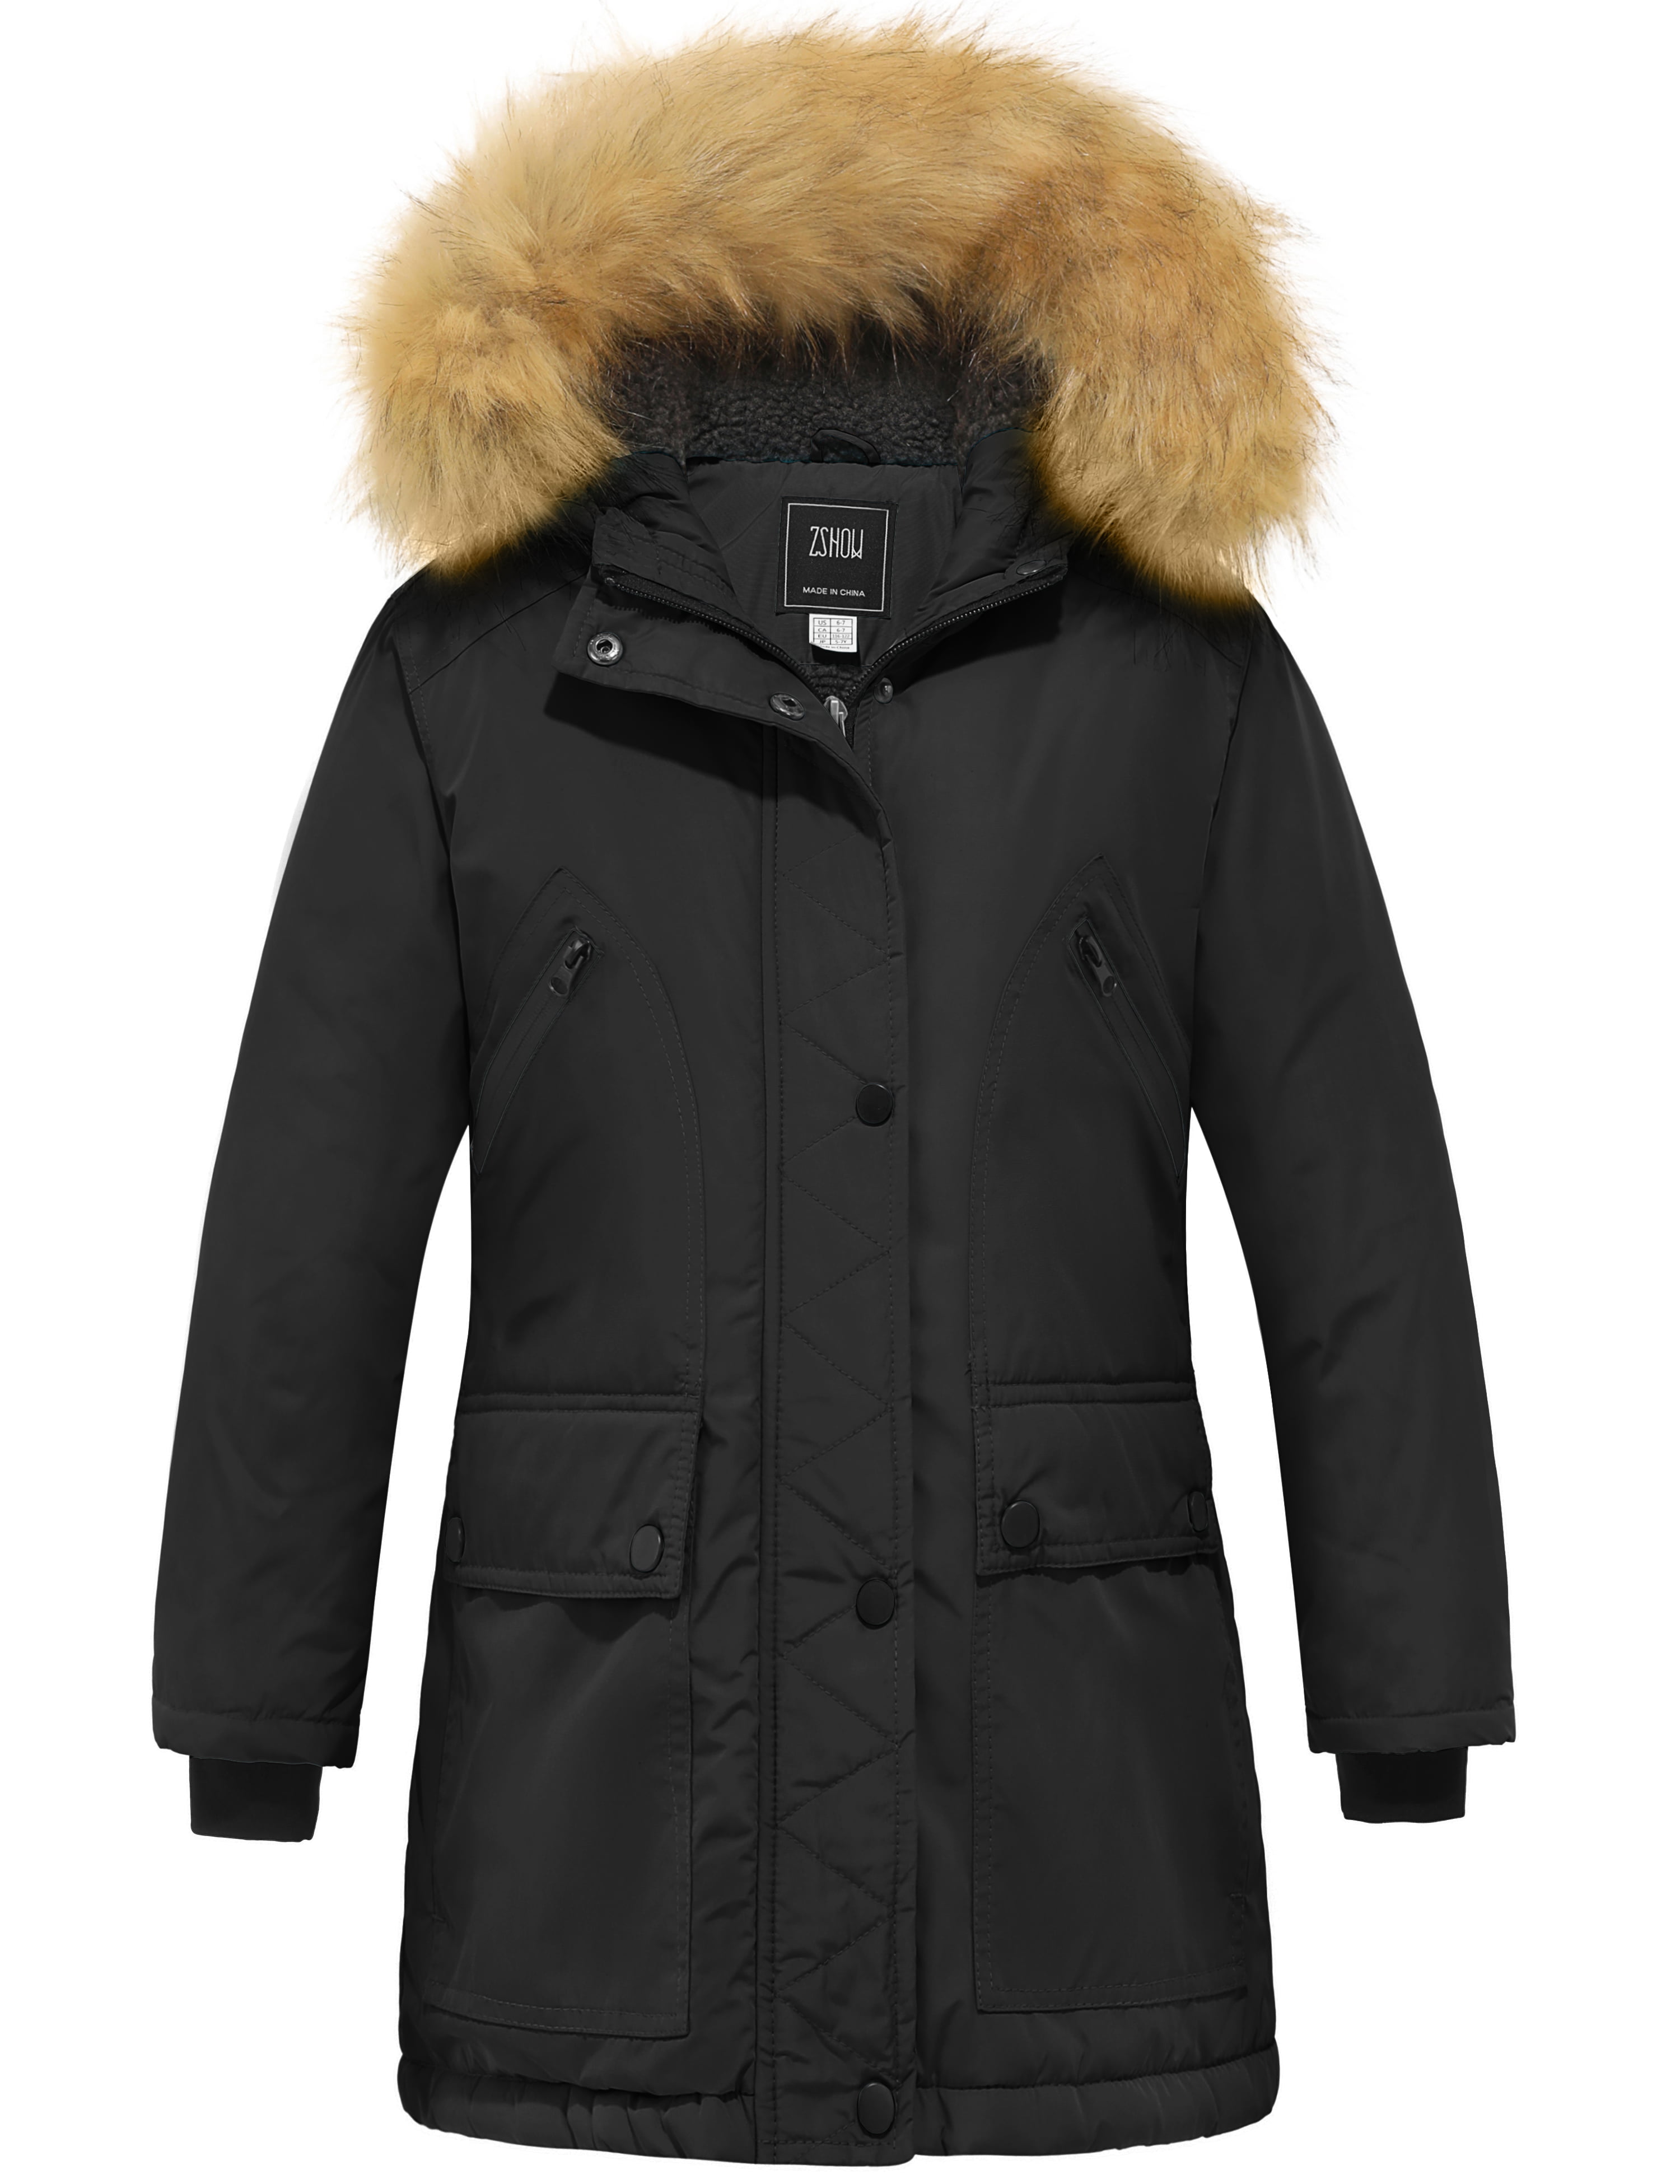 ZSHOW Girls' Long Winter Coat Parka Water Resistant Warm Puffer Jacket